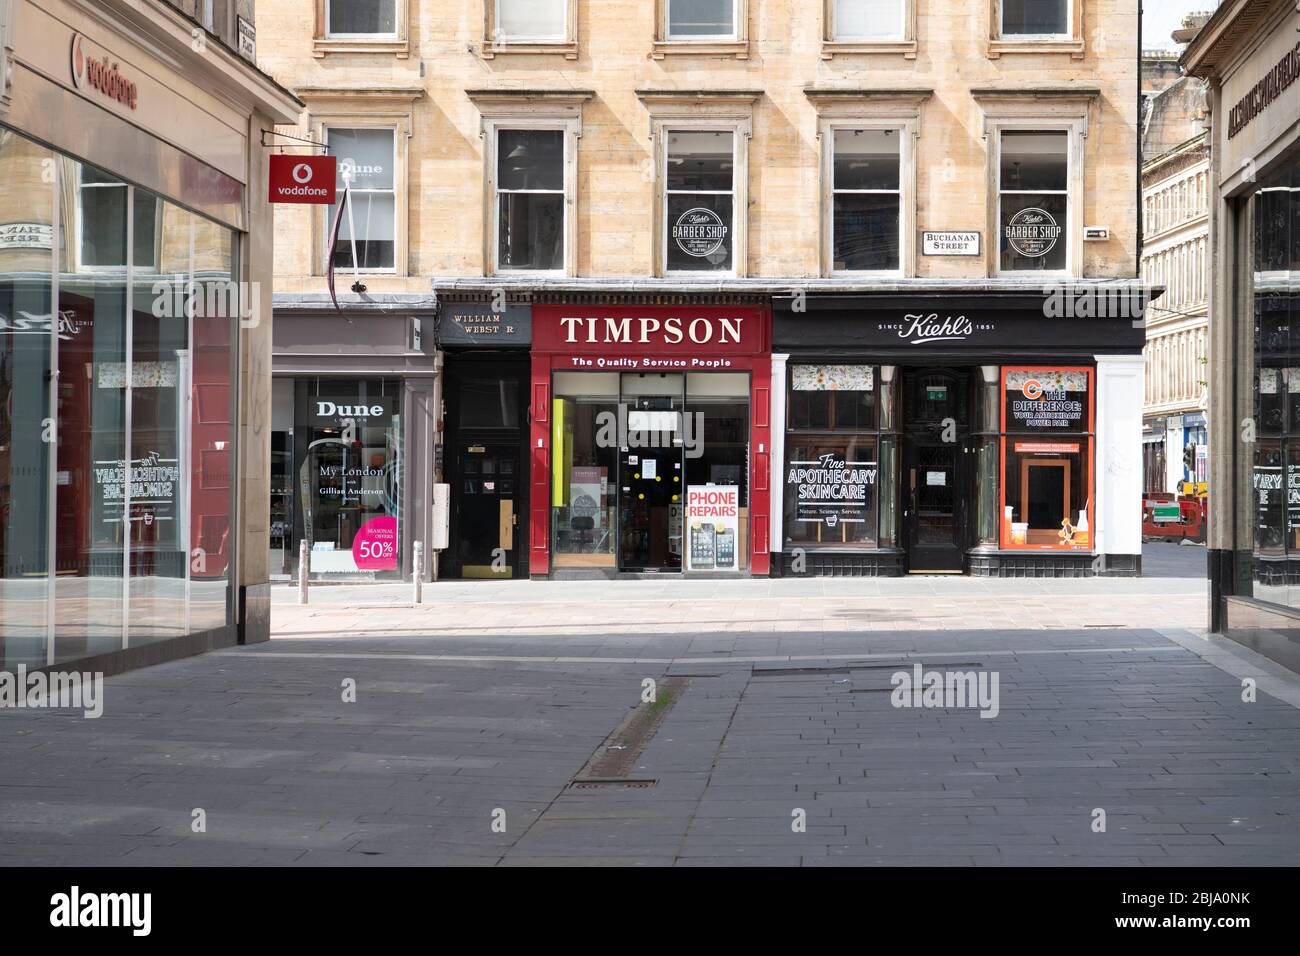 Timpson store, closed during the coronavirus pandemic lockdown, Buchanan Street, Glasgow, Scotland, UK Stock Photo